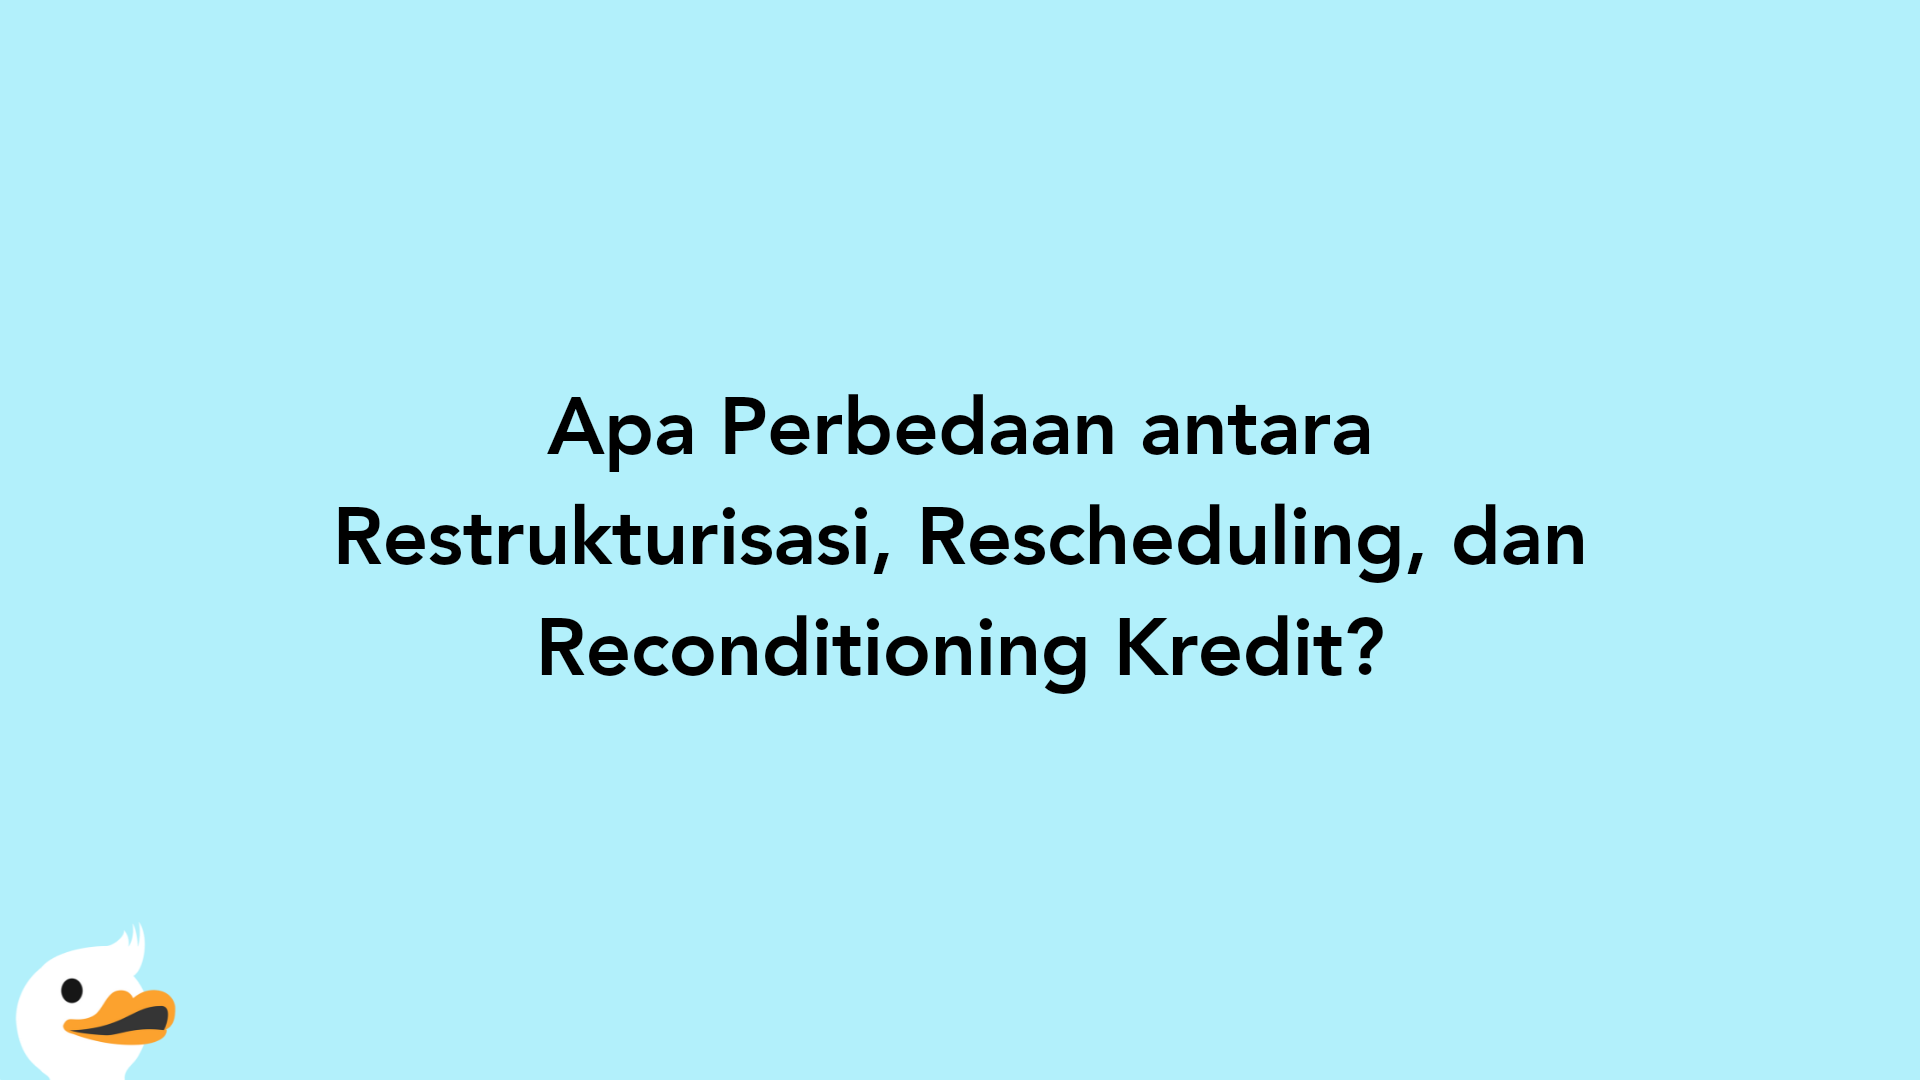 Apa Perbedaan antara Restrukturisasi, Rescheduling, dan Reconditioning Kredit?